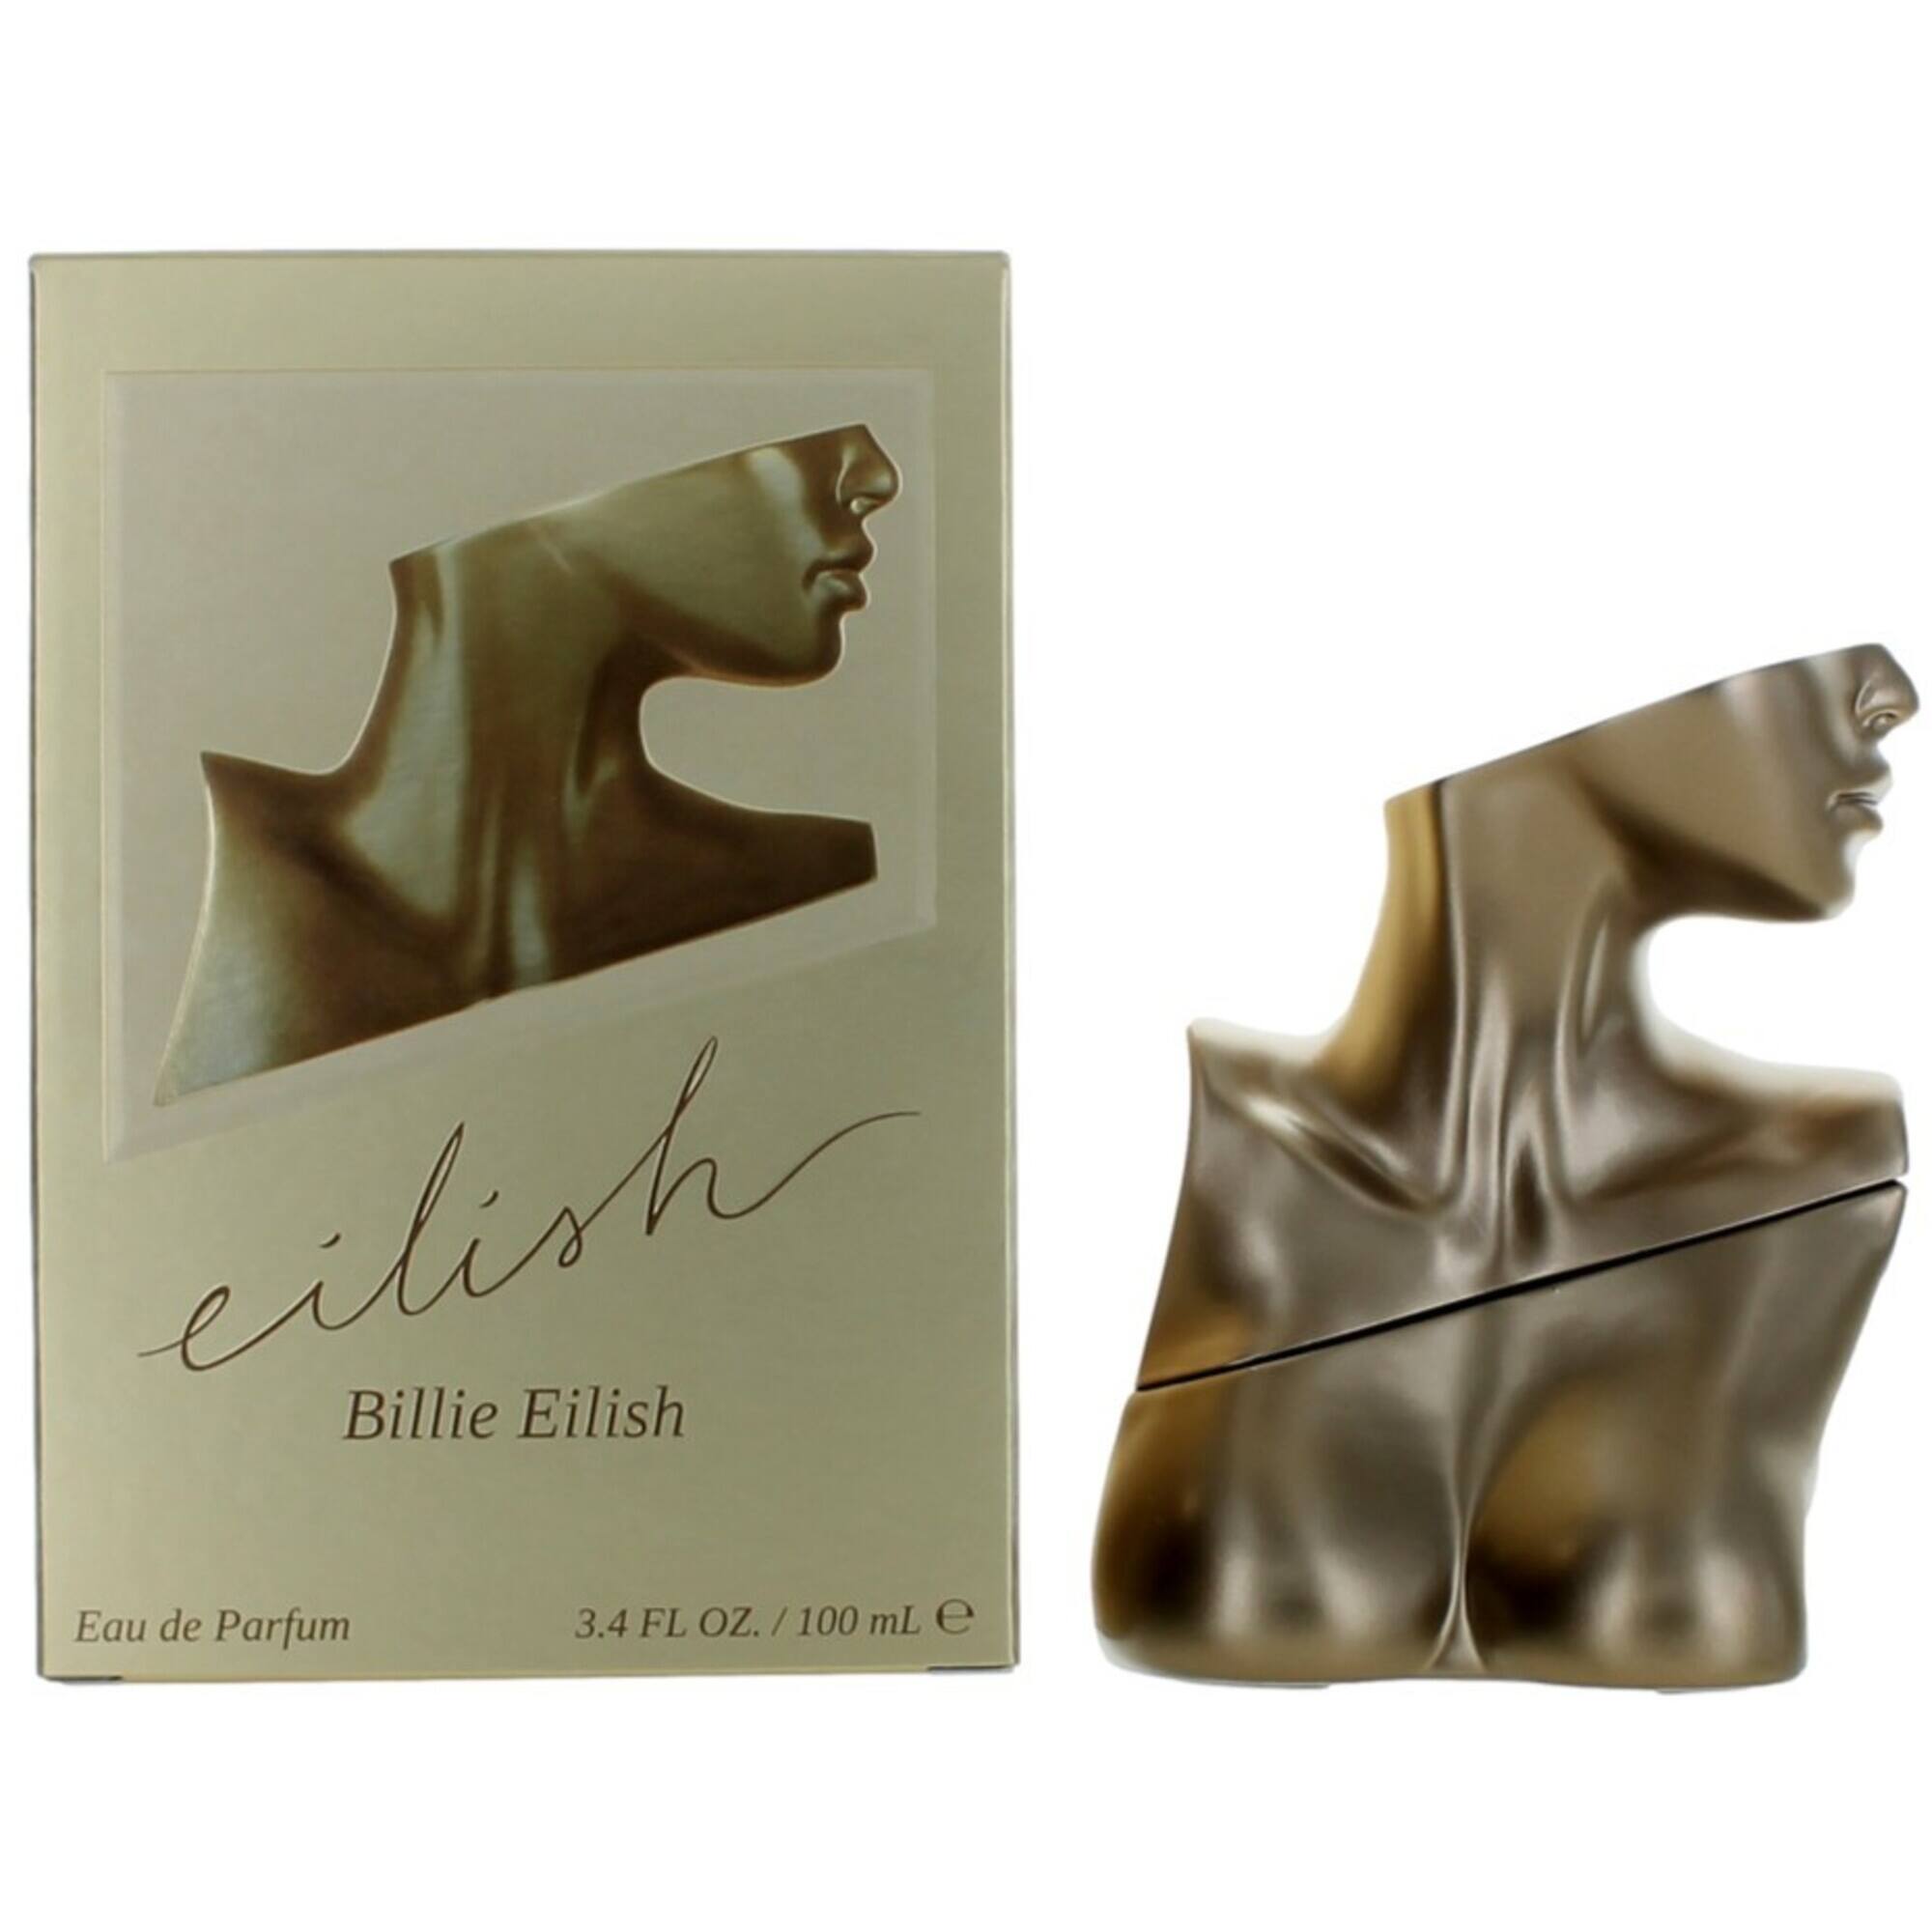 Billie Eilish Women's Eau De Parfum Spray - Sleek Woods and Musk Warm, 3.4 oz